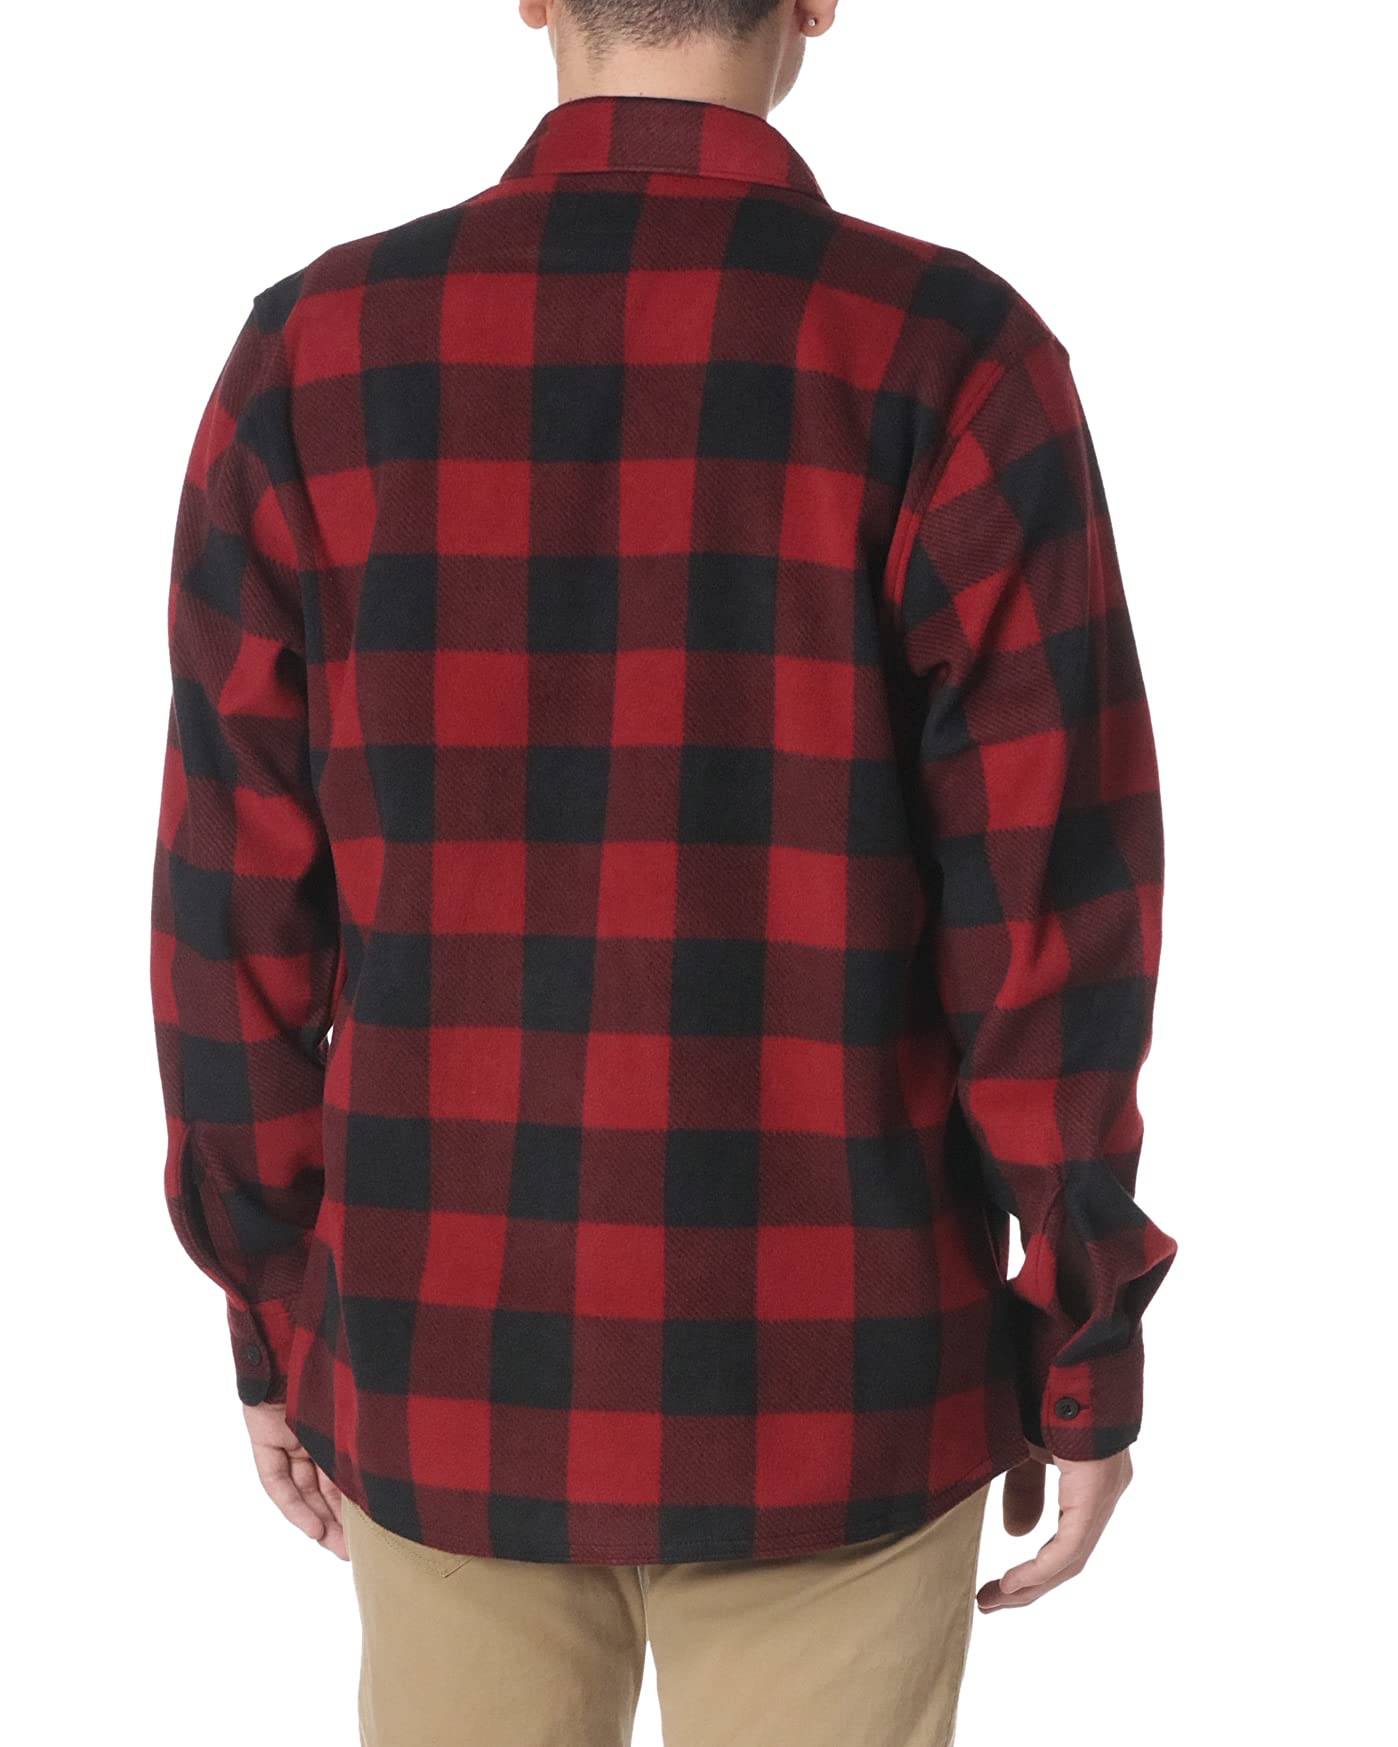 Wrangler Authentics Men's Long Sleeve Heavyweight Fleece Shirt, Red Buffalo Plaid, Large